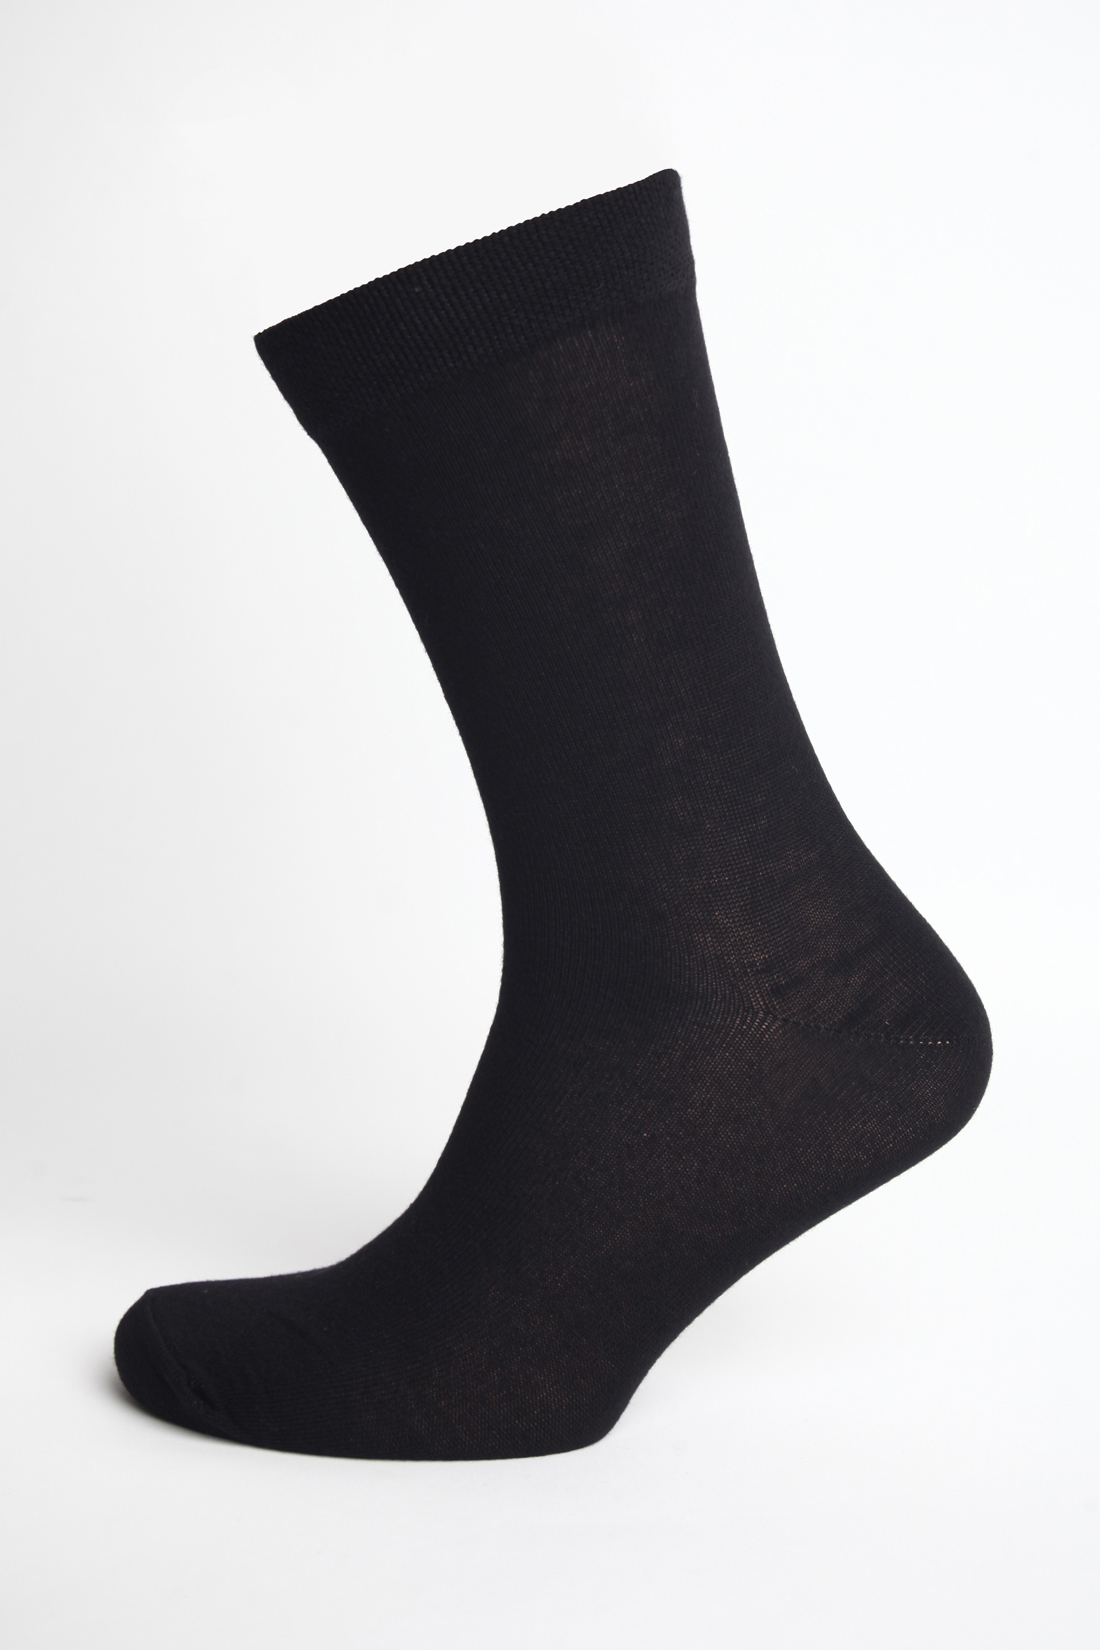 Мужские носки, 2 пары (арт. baon B891108), размер 43/45, цвет черный Мужские носки, 2 пары (арт. baon B891108) - фото 3